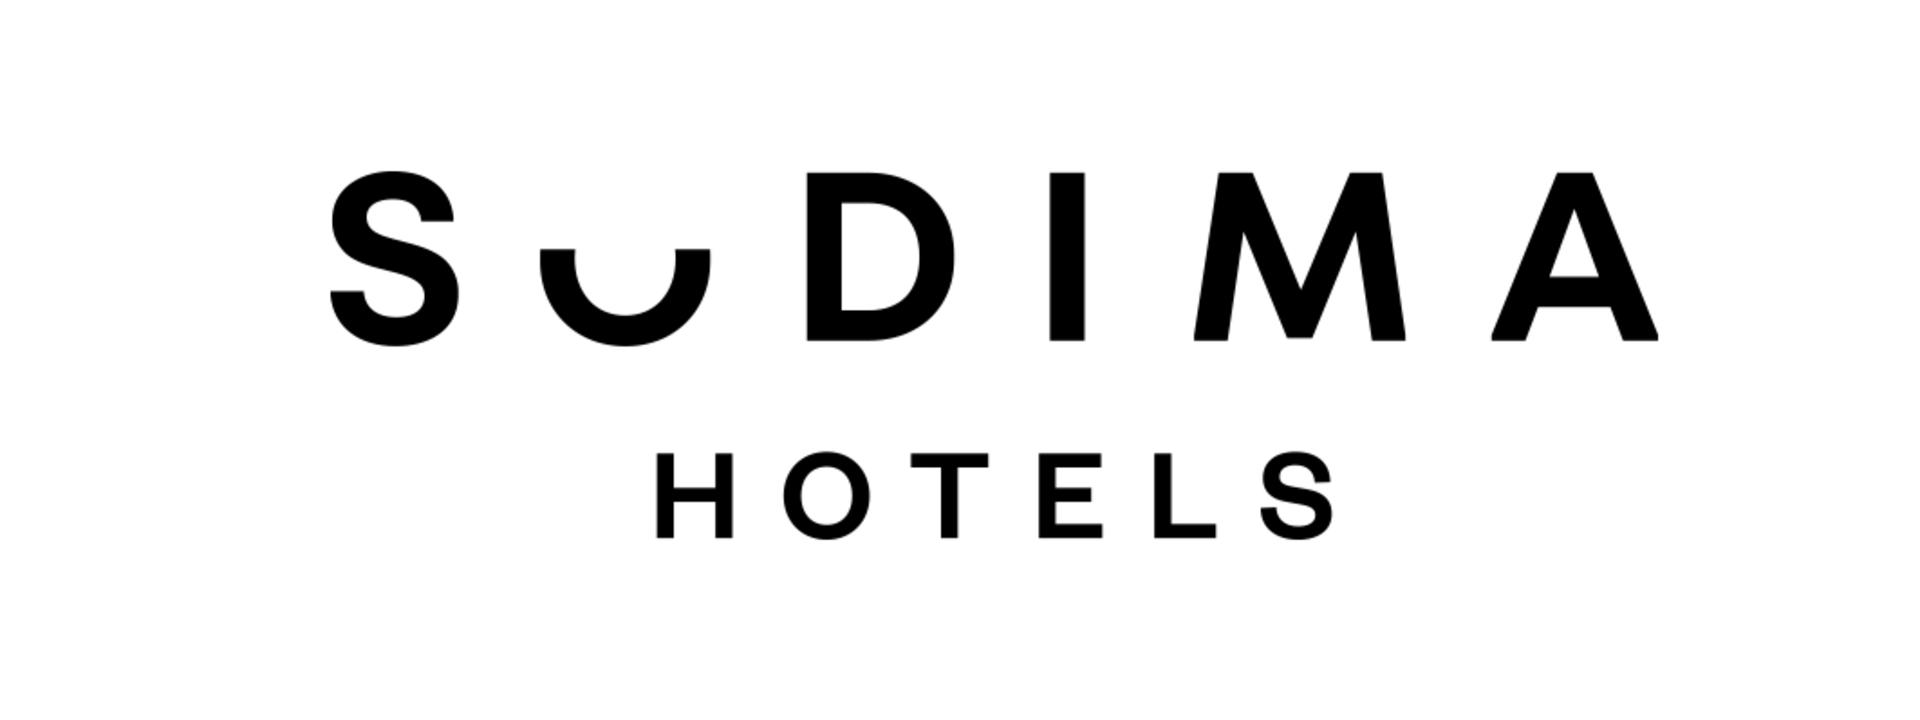 sudima-hotels-master-black-jpeg_0.jpg